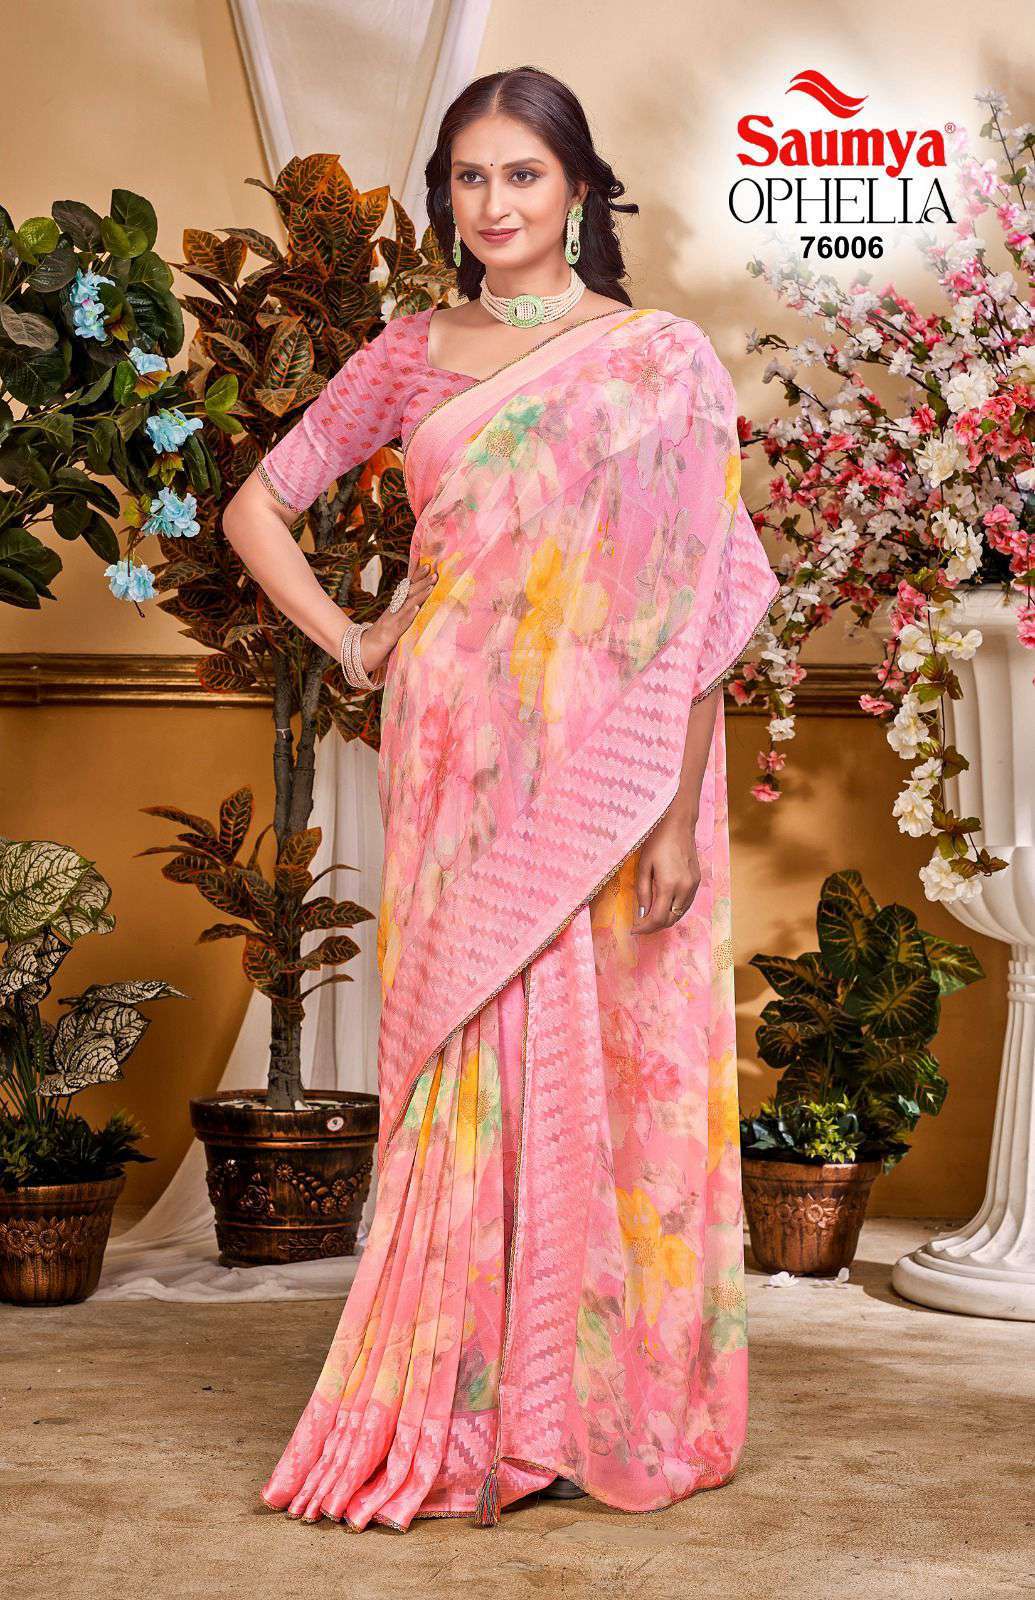 Saumya Ophelia Fancy Georgette Designs Exclusive Saree Dealers In Surat